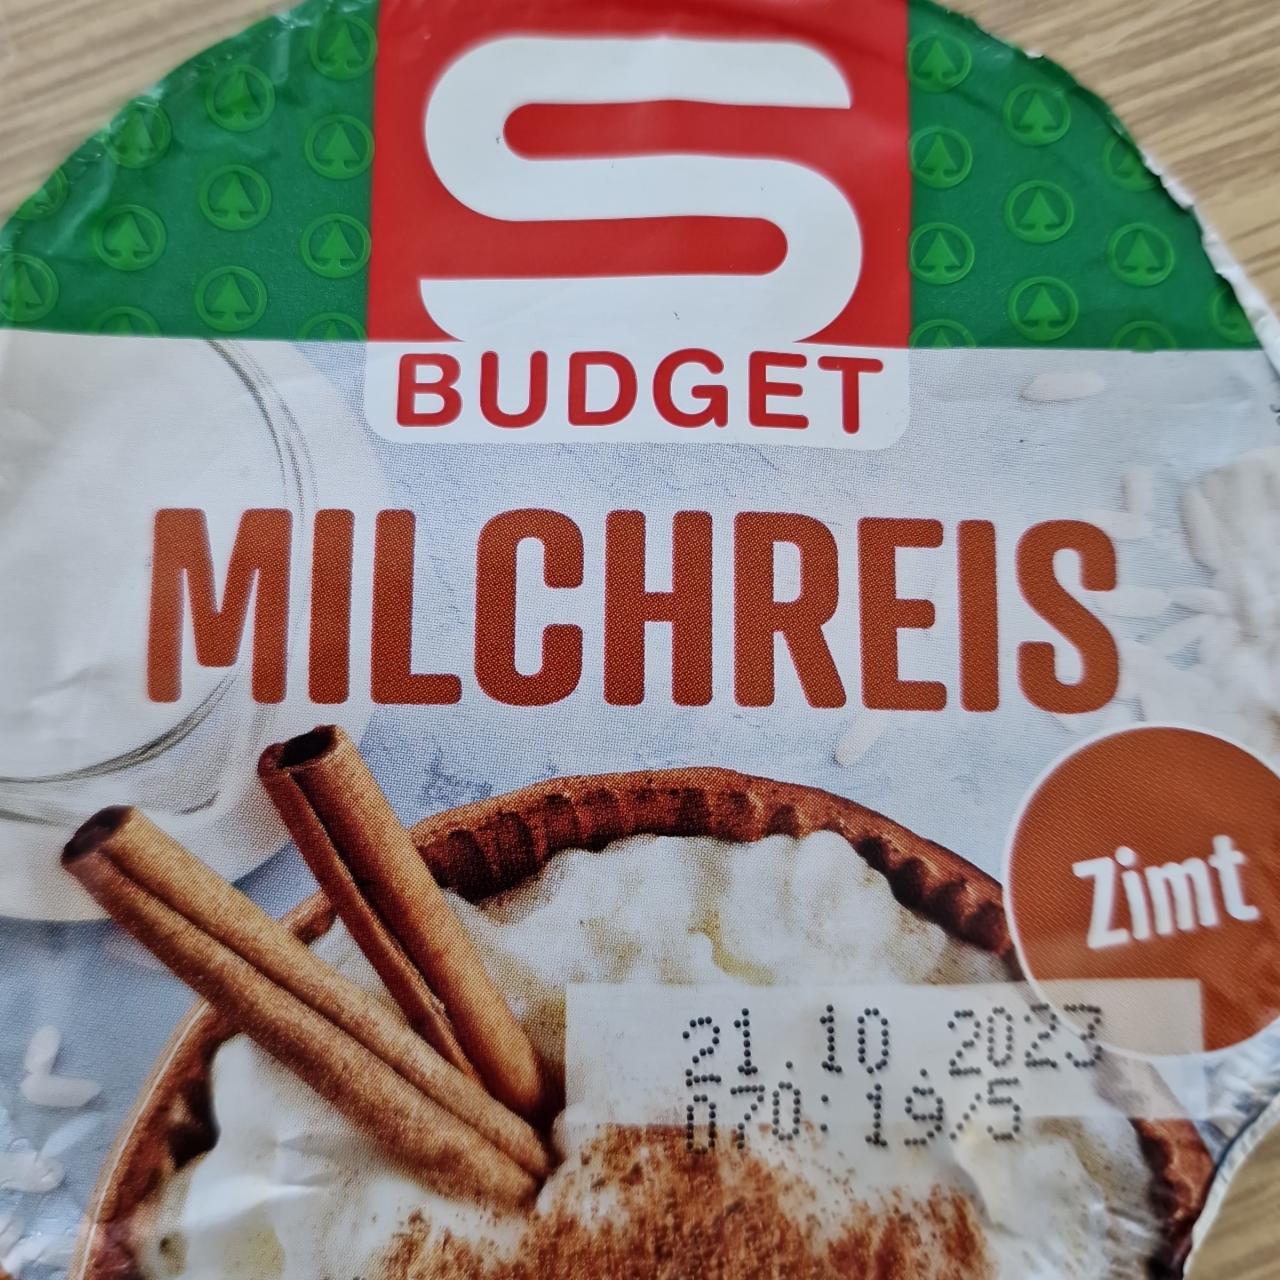 Fotografie - Milchreis Zimt S Budget